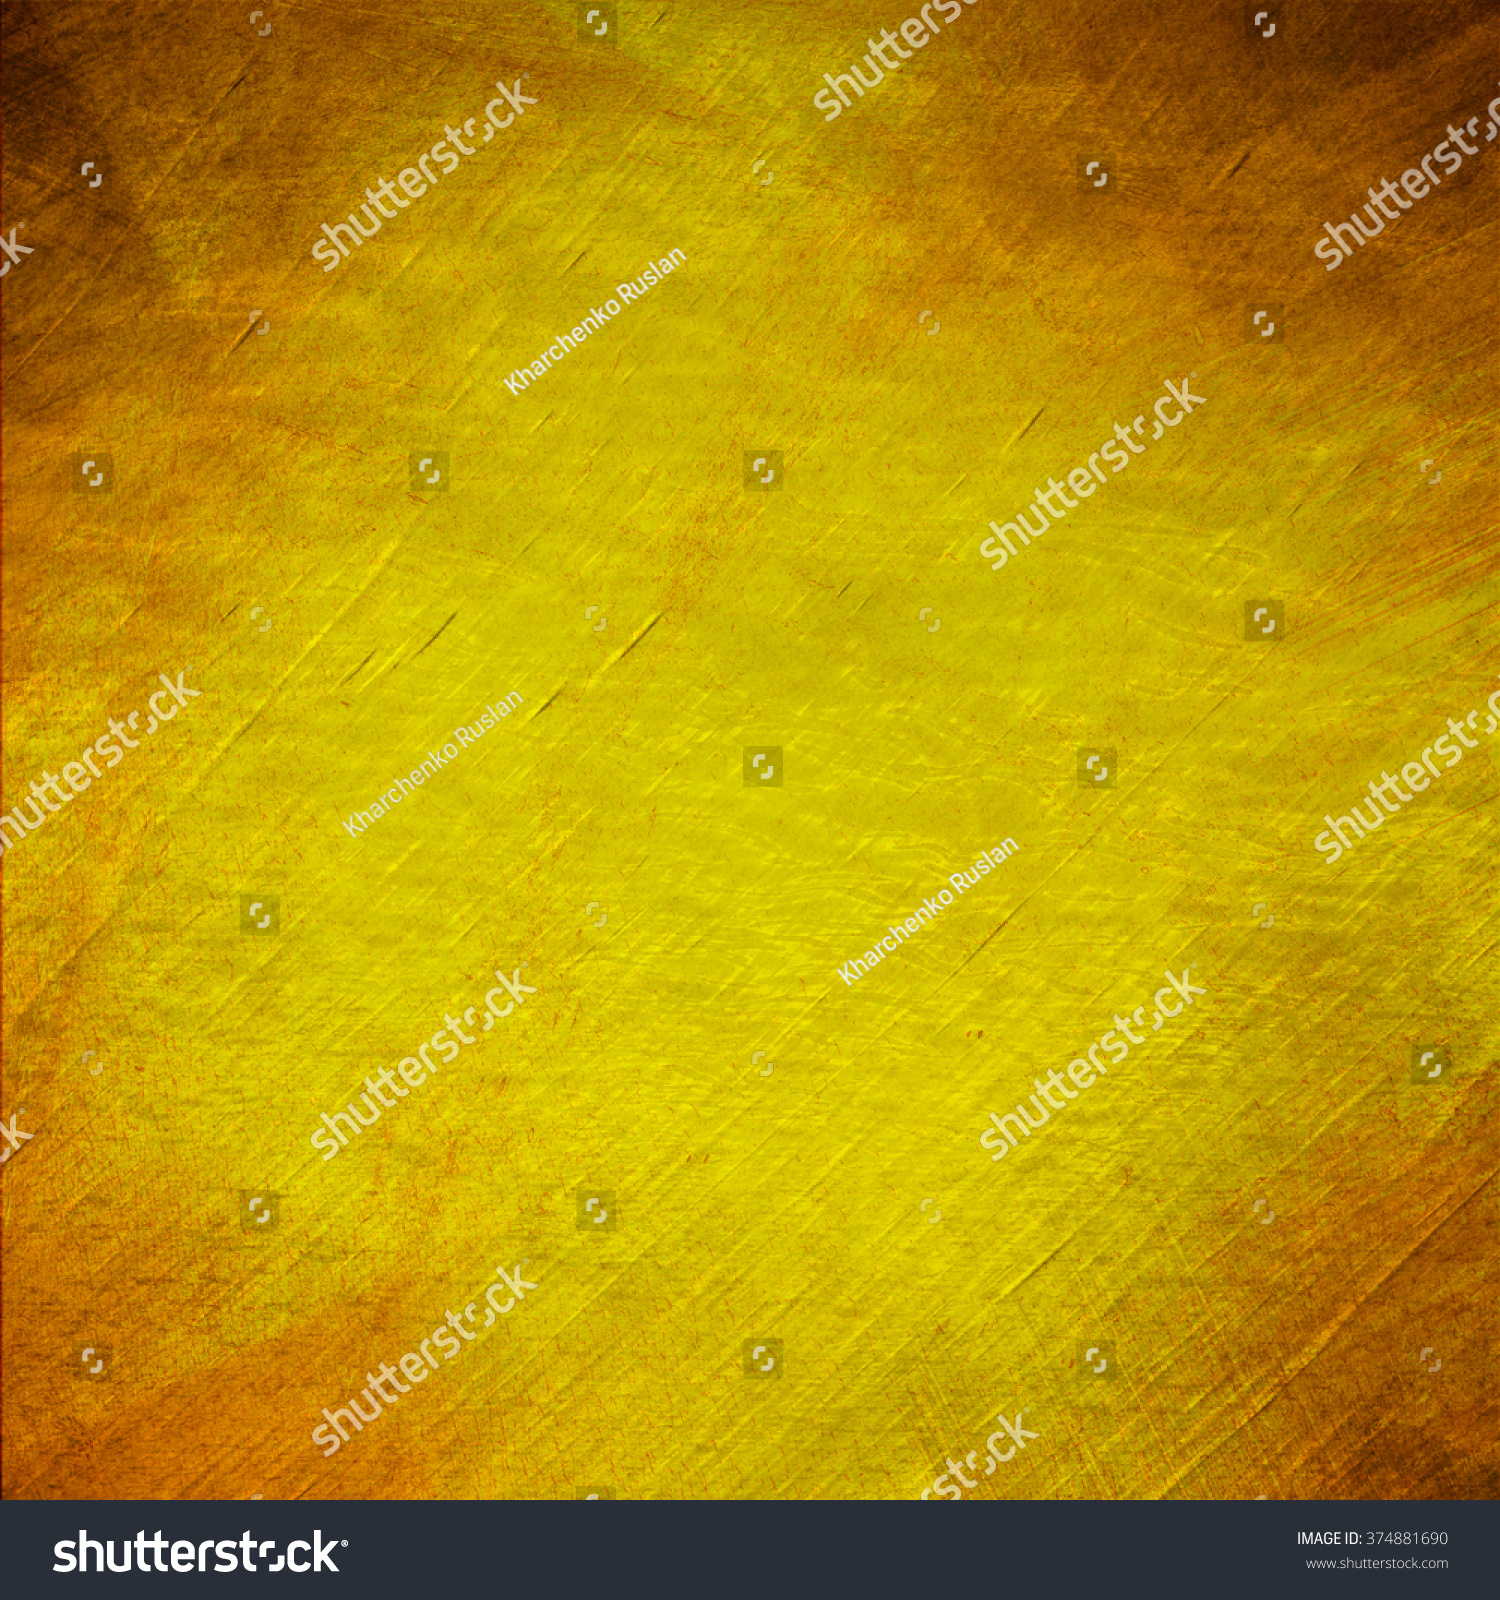 Edit Vectors Free Online - yellow background | Shutterstock Editor